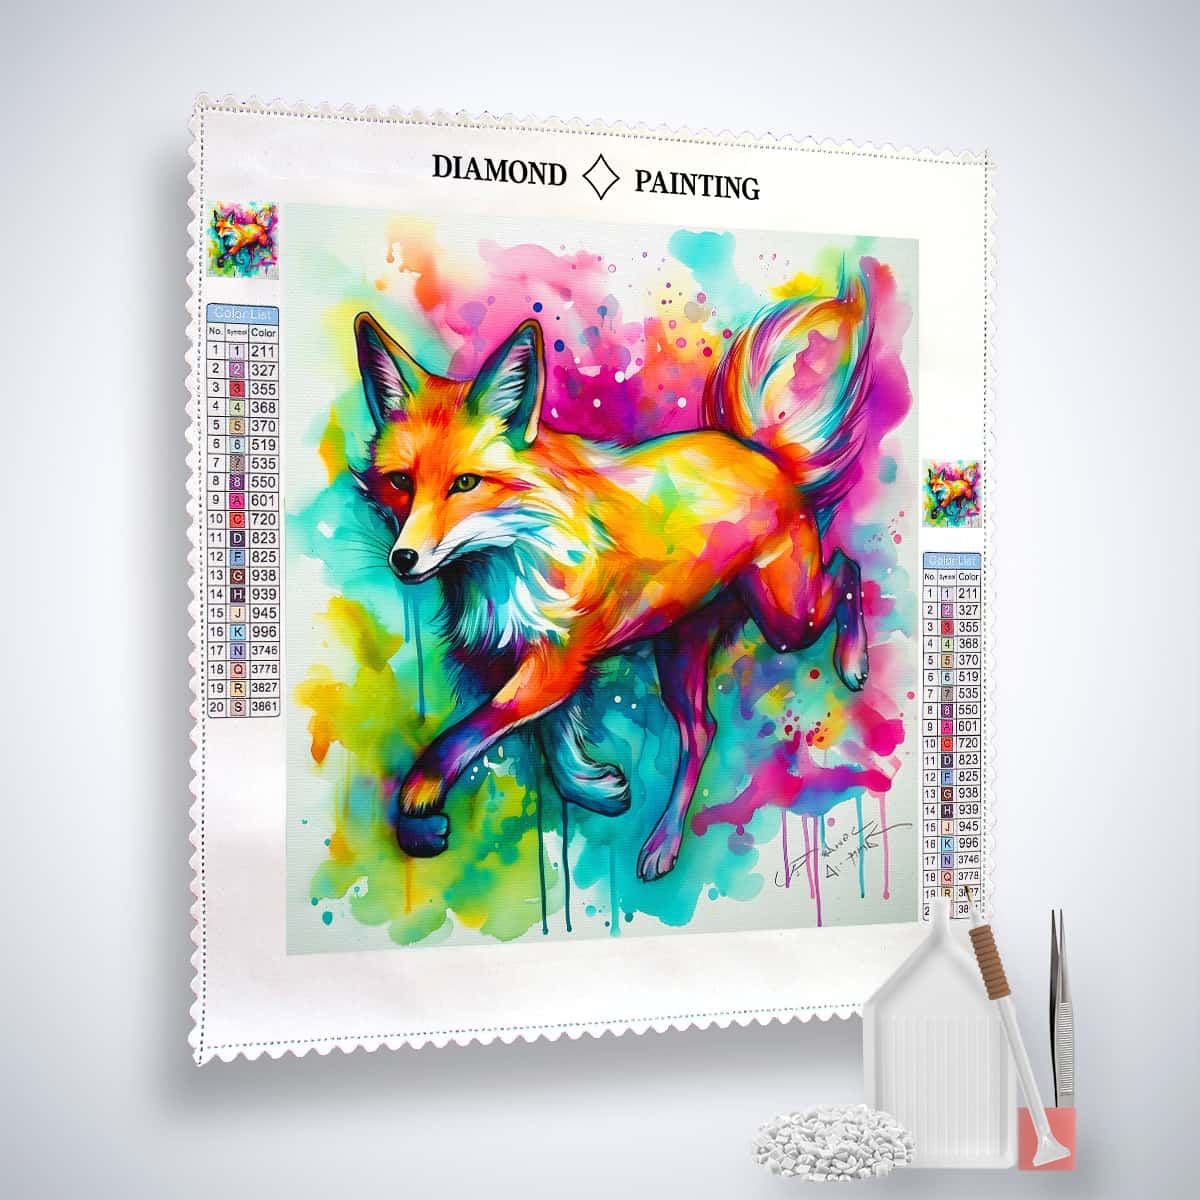 Diamond Painting - Fuchs Abstrakt - gedruckt in Ultra-HD - Fuchs, Neu eingetroffen, Quadratisch, Tiere